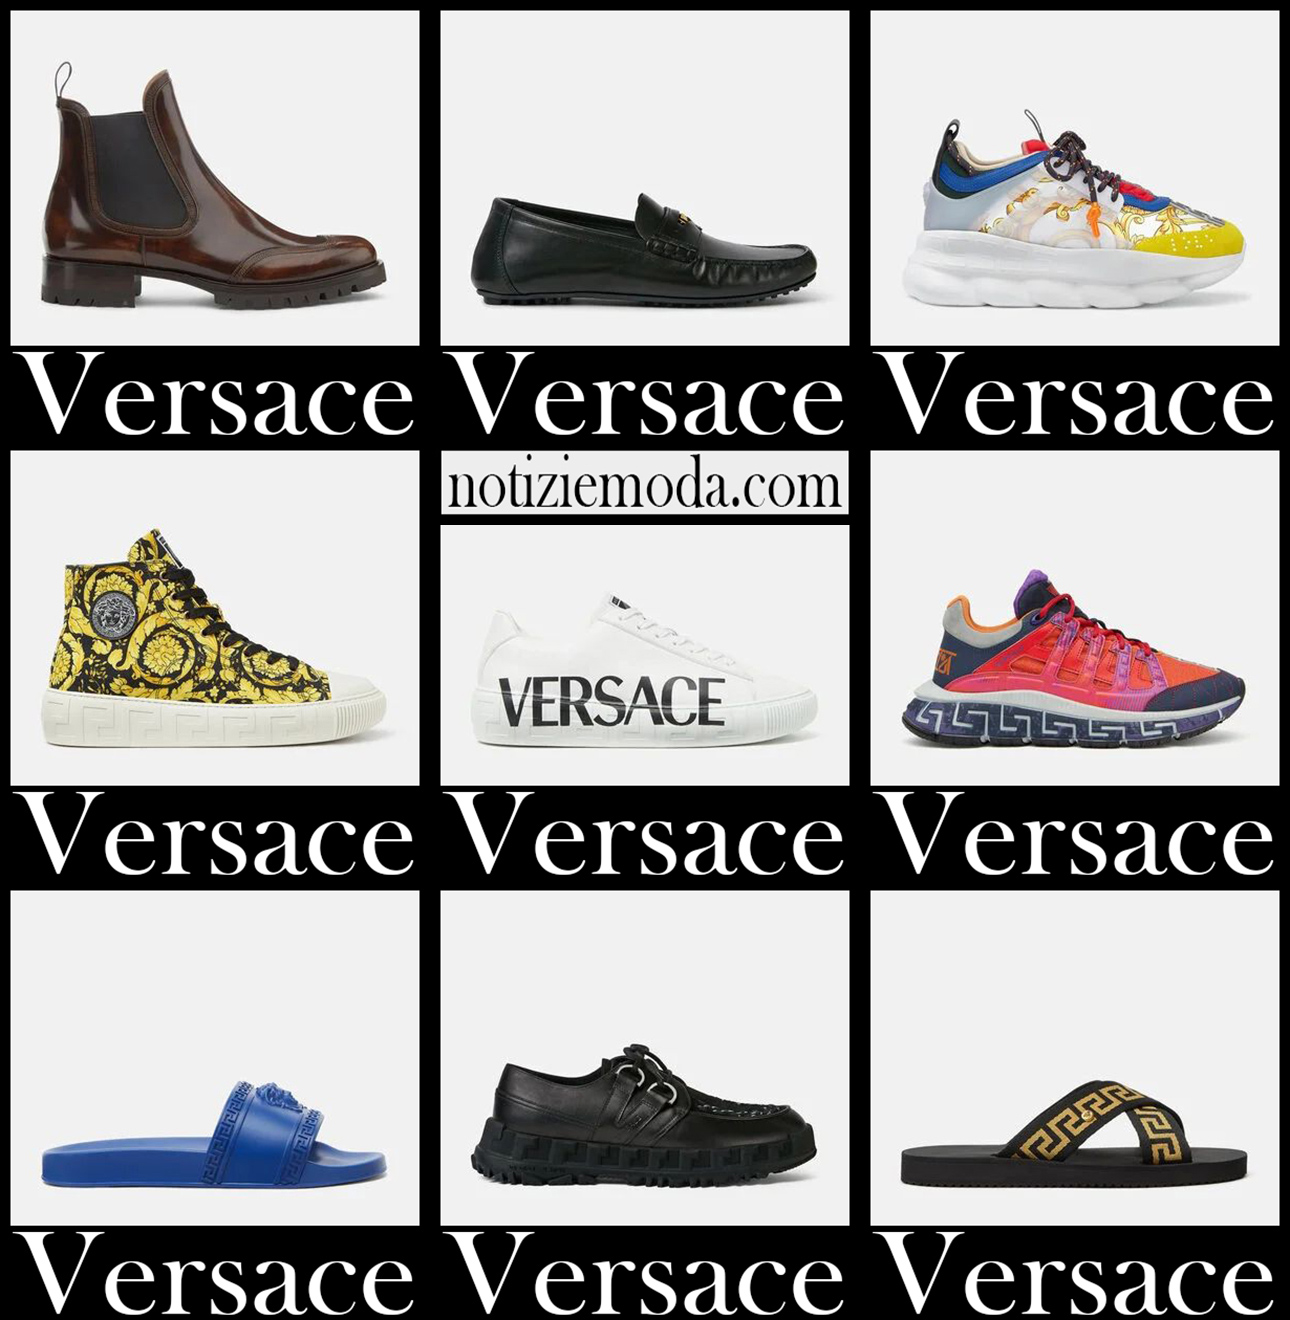 Nuovi arrivi scarpe Versace 2021 calzature moda uomo